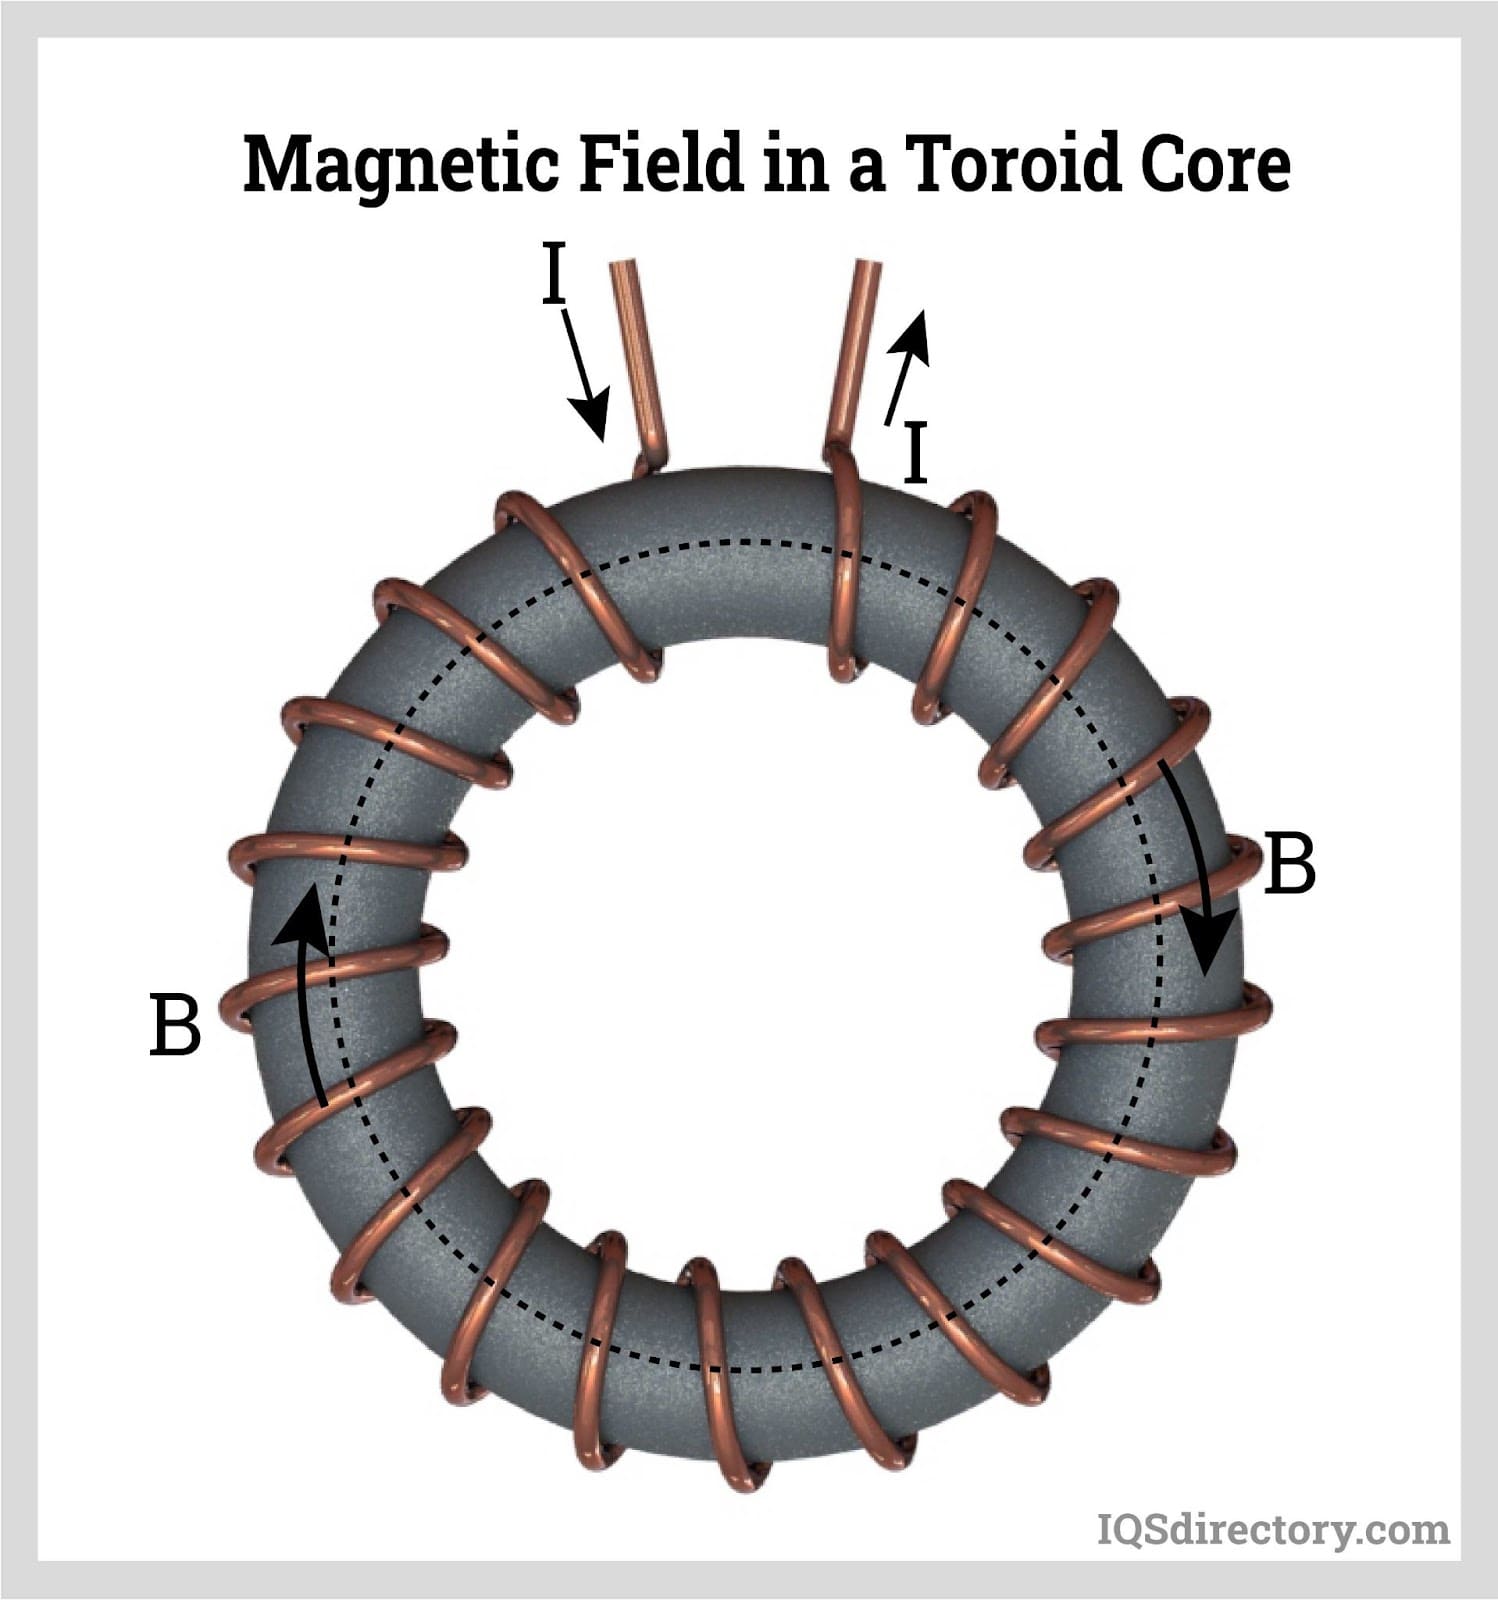 Magnetic Field in a Toroid Core